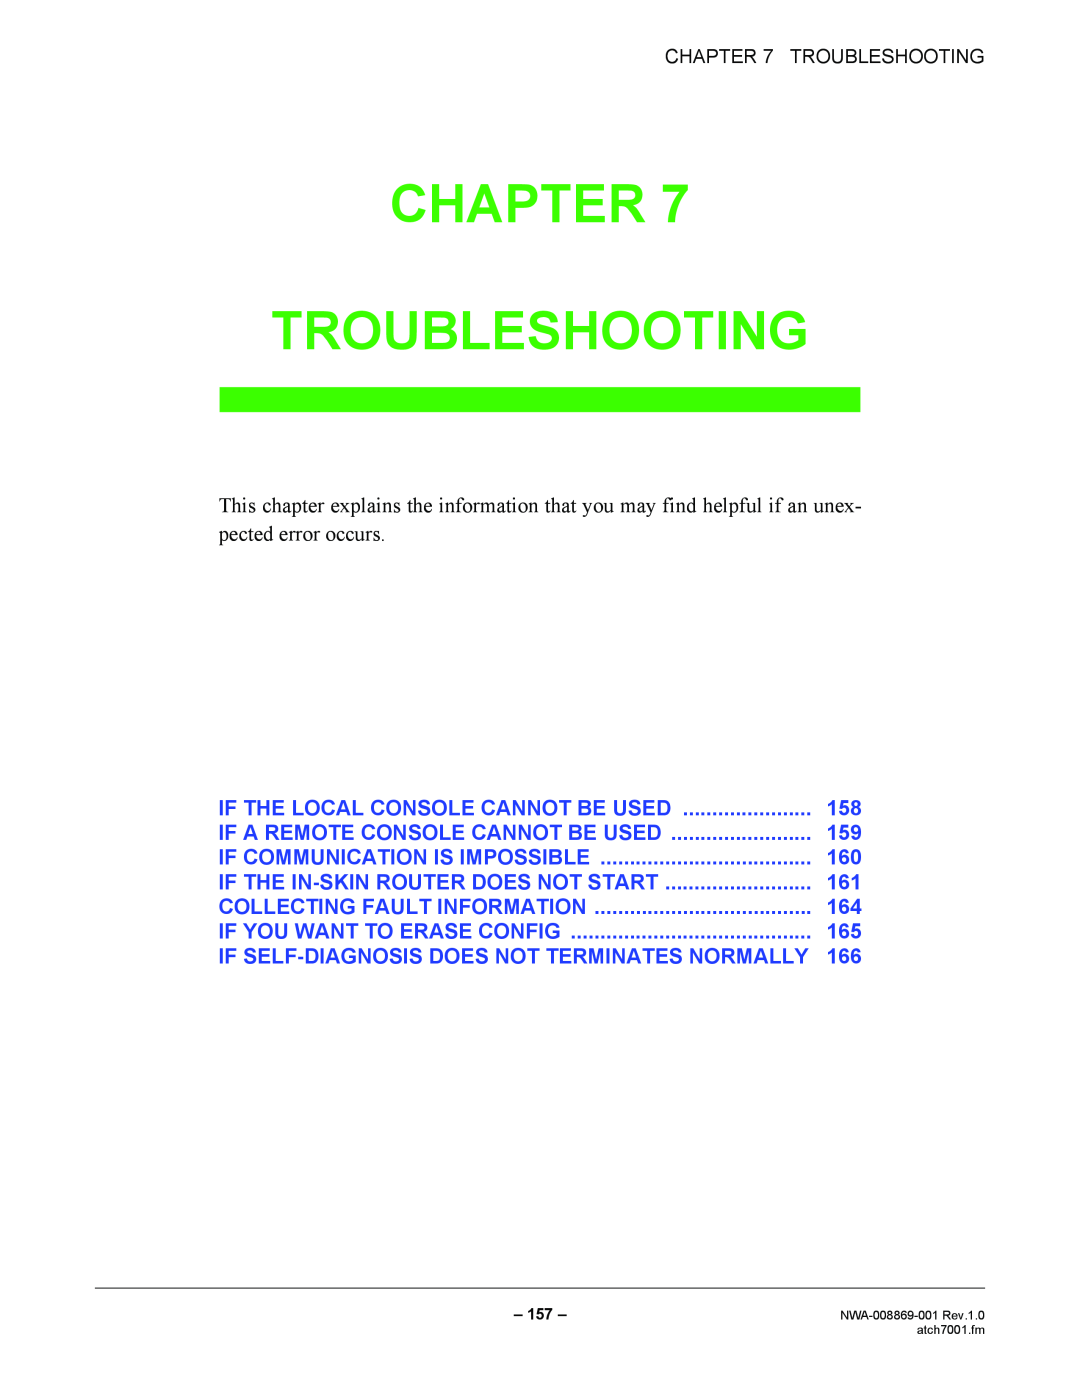 NEC NWA-008869-001 manual Chapter Troubleshooting 